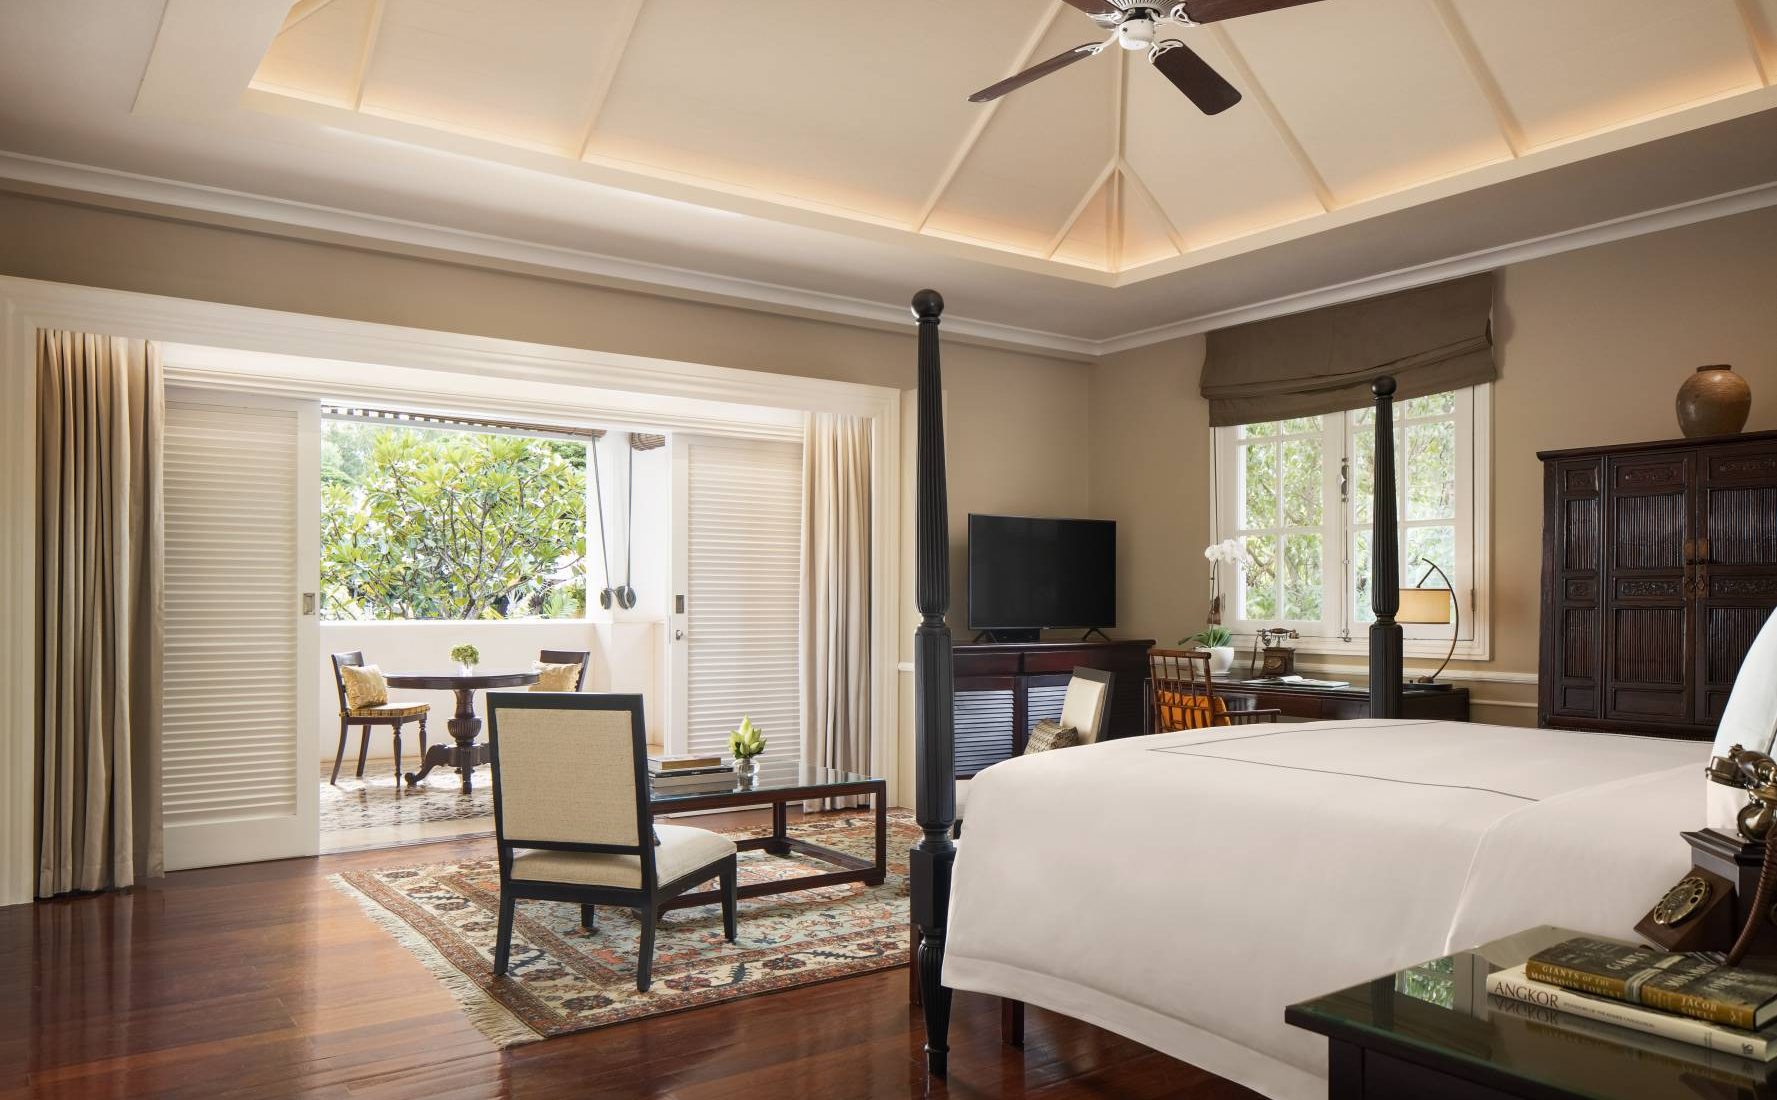 Raffles Grand Hotel d'Angkor - Two-bedroom Royal Villa